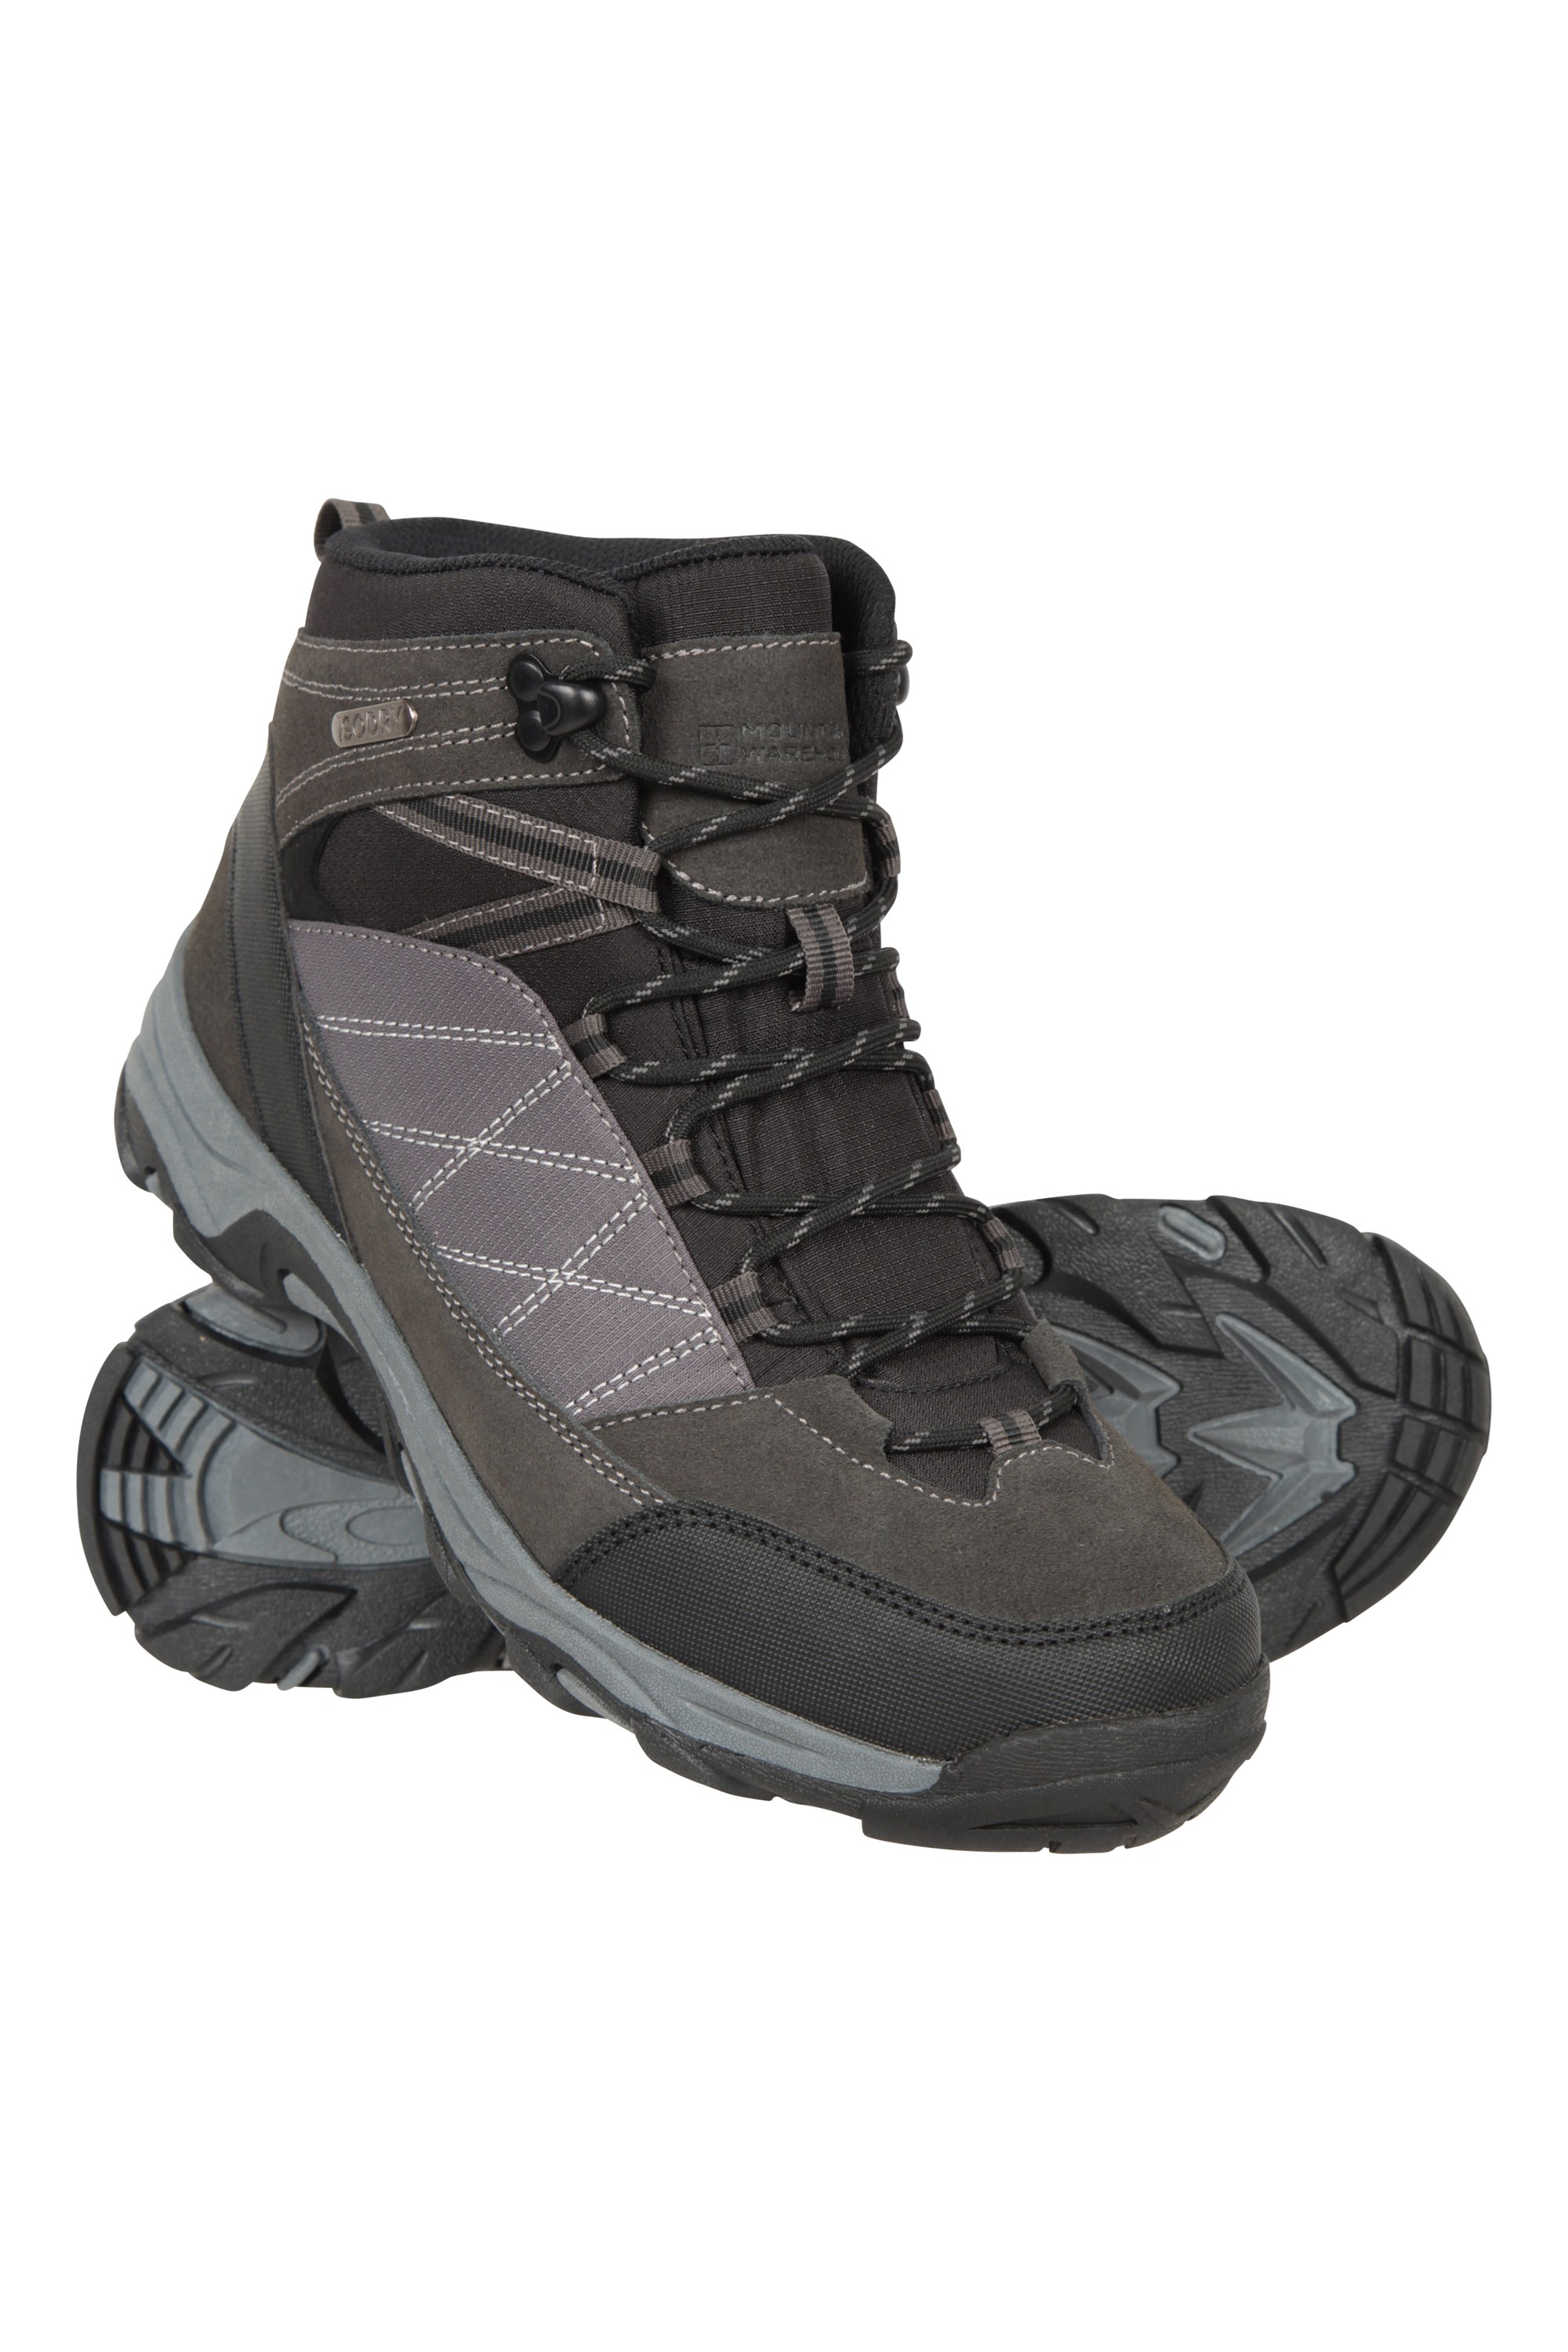 Ideal for Walking & Trekking Ladies Suede & Mesh Upper Footwear Breathable Durable Hiking Shoes Mountain Warehouse Rapid Kids Waterproof Boots Heel & Toe Bumpers 